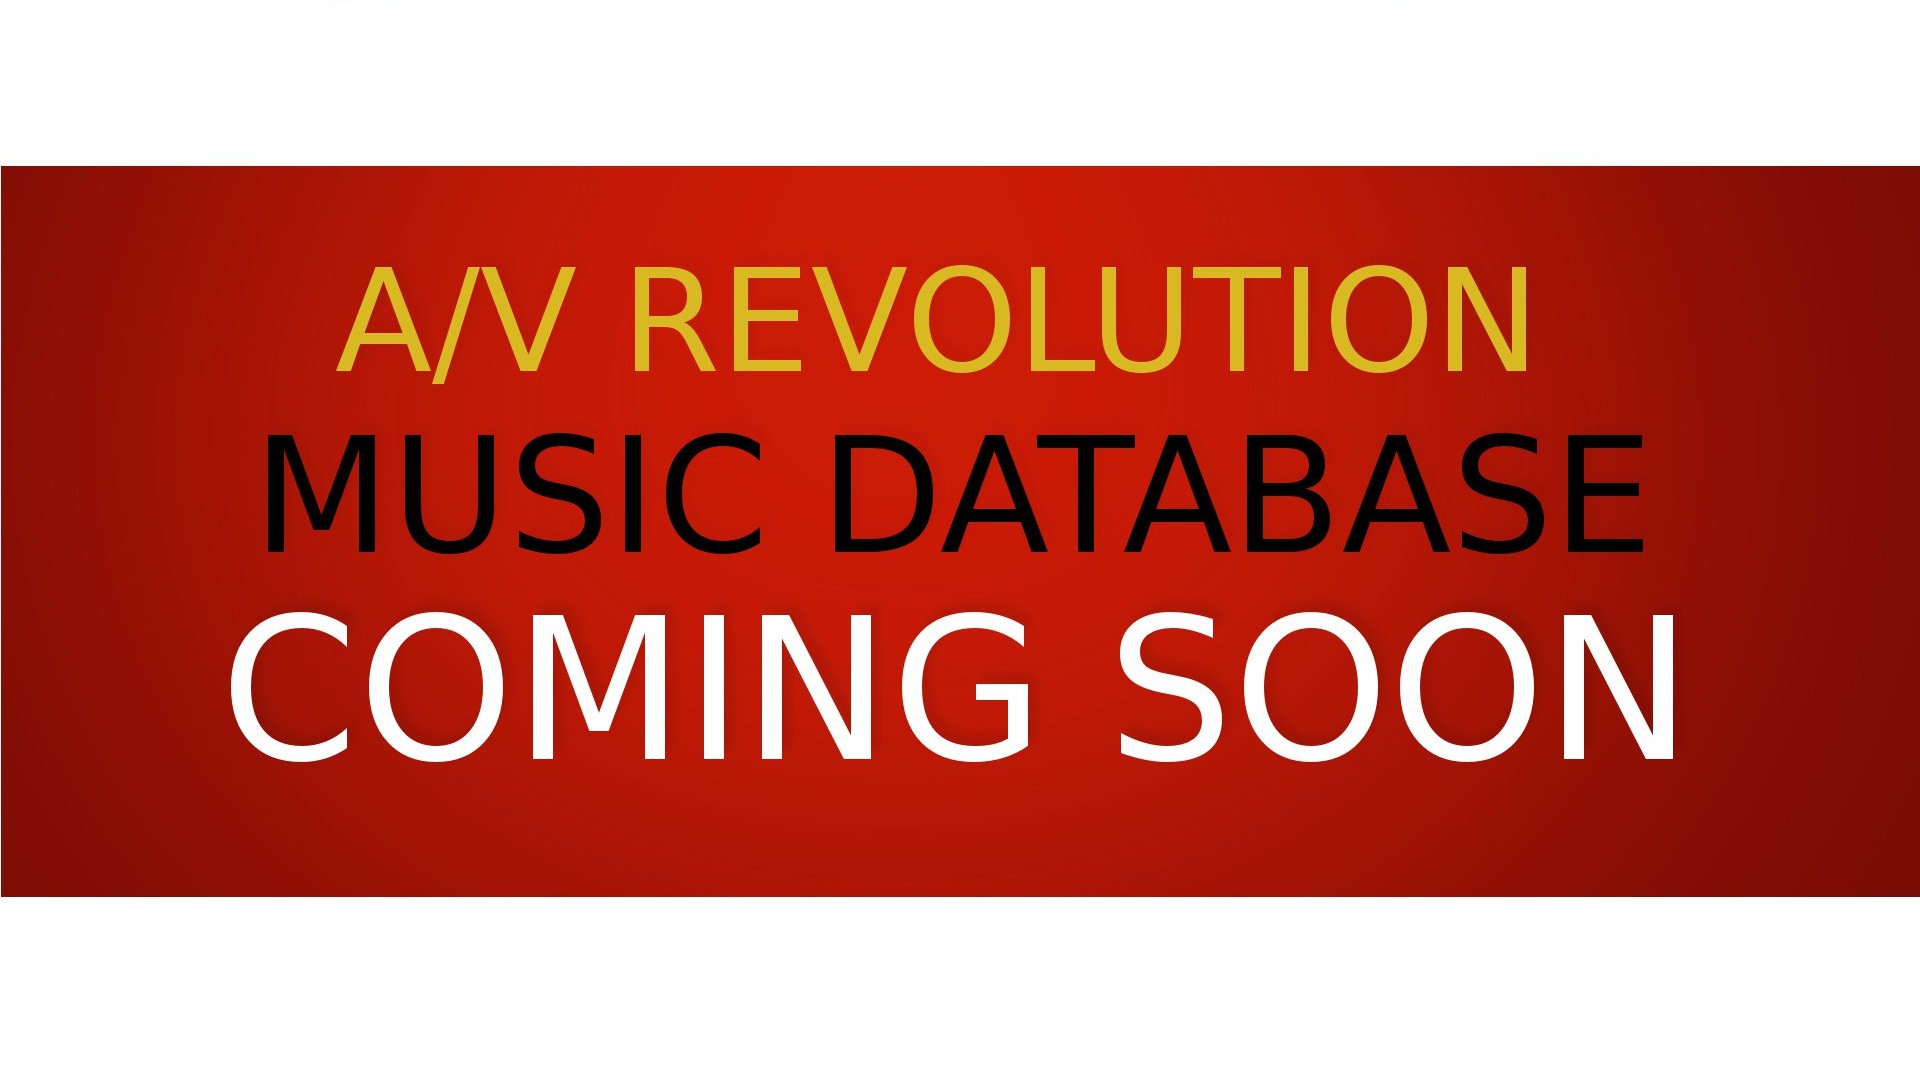 AVR Database Coming soon